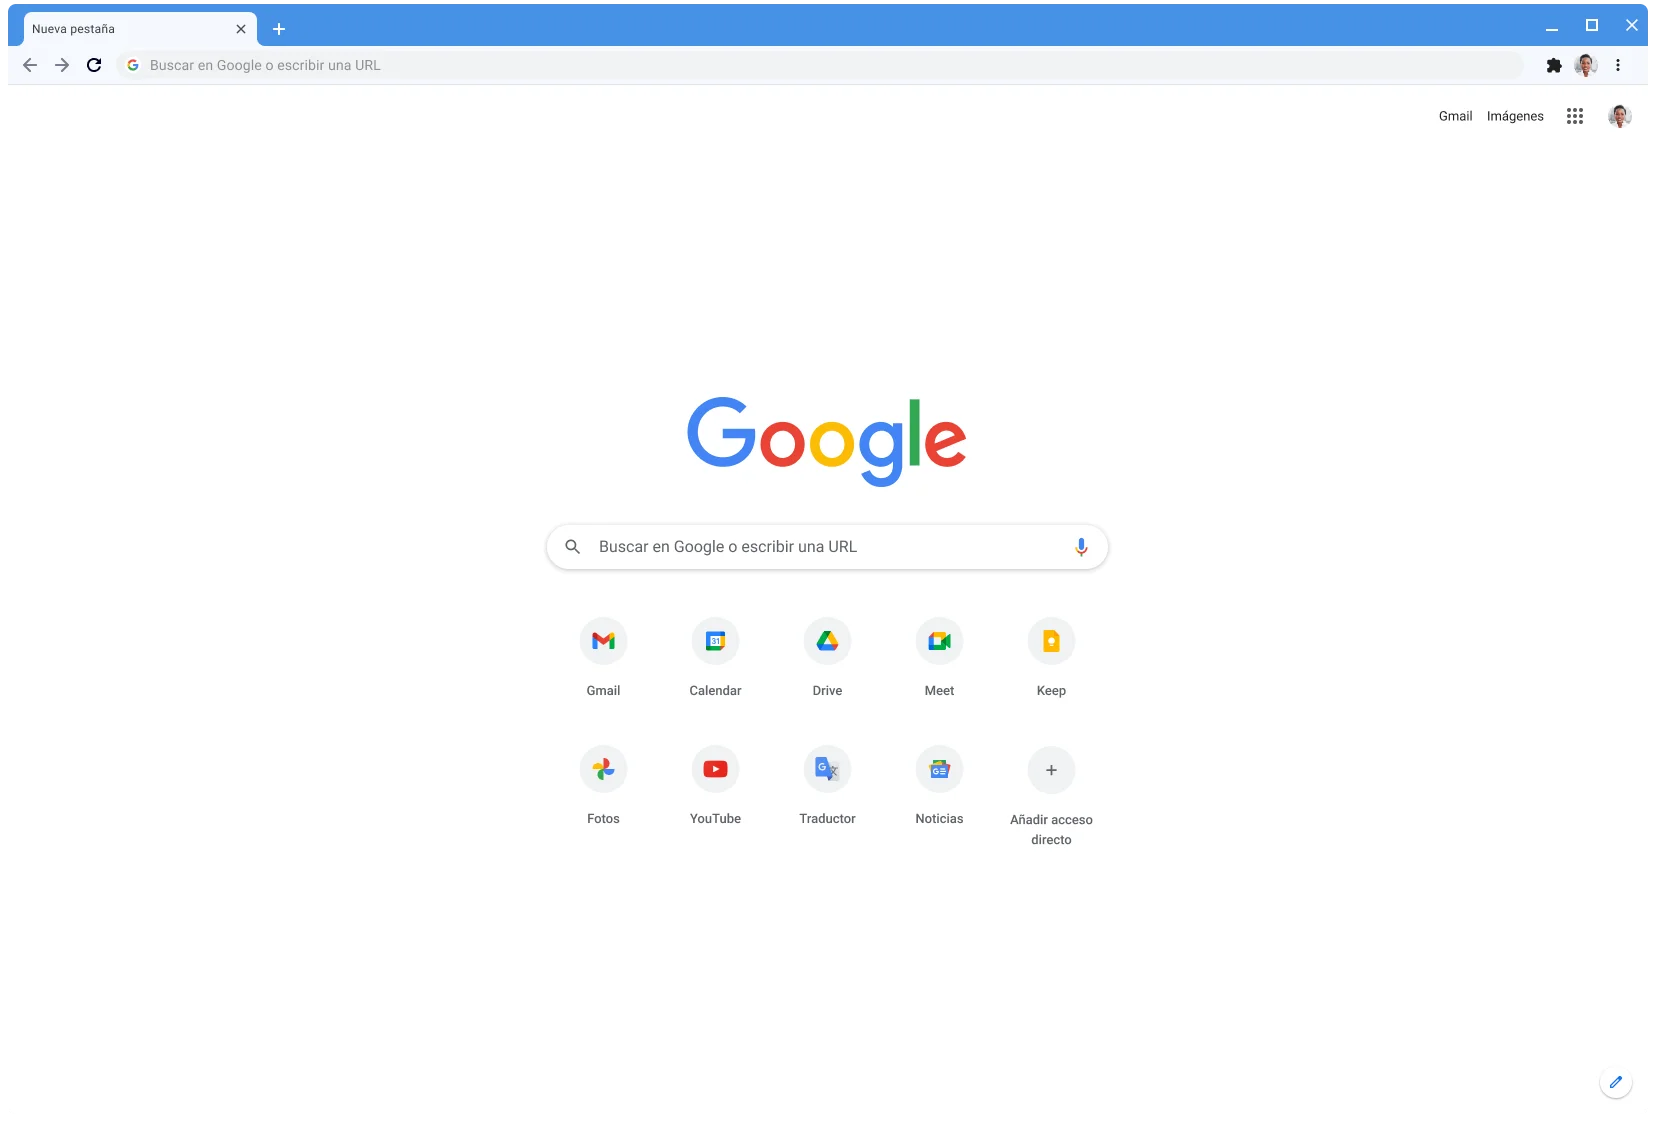 Ventana del navegador Chrome donde se muestra Google.com, con el tema clásico.